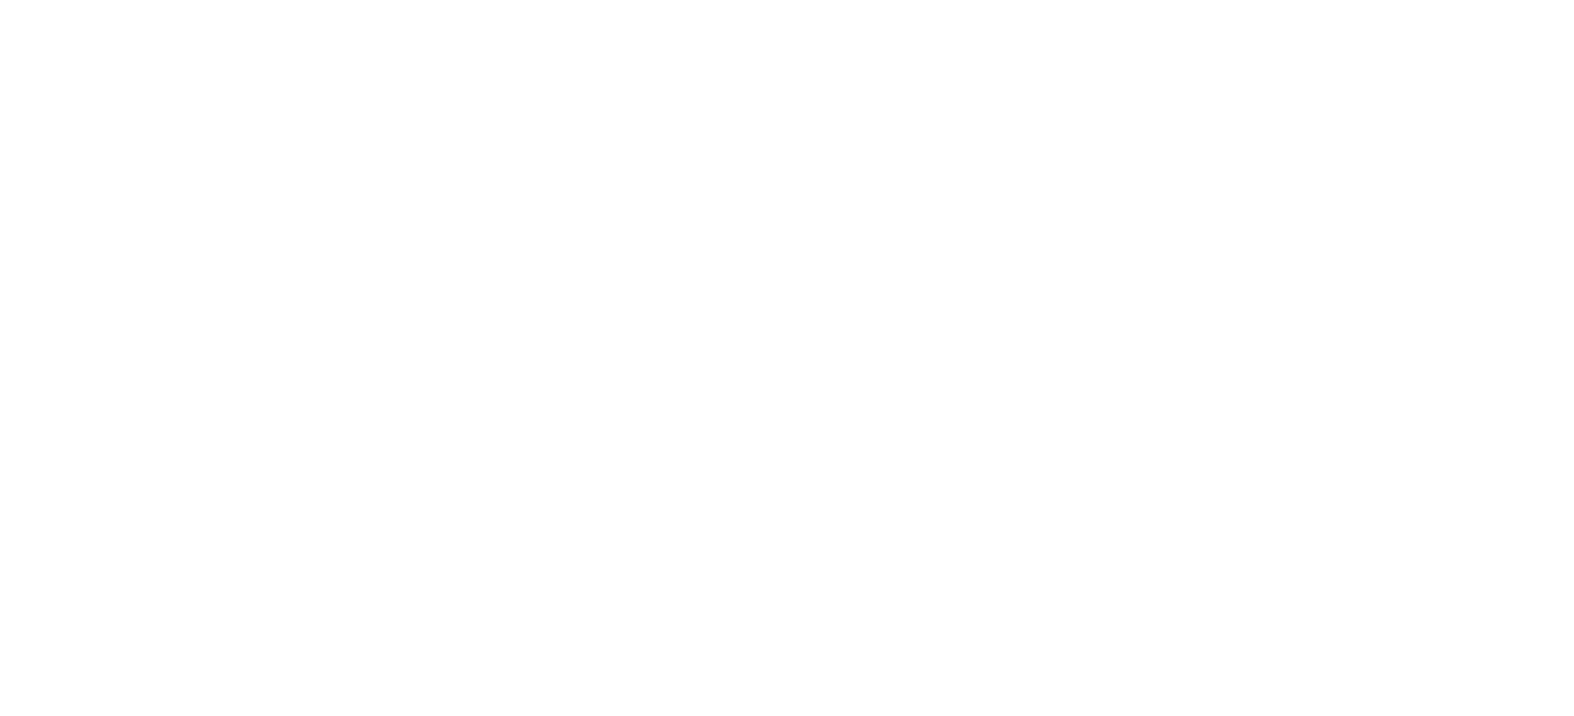 Park Hotels & Resorts

 Logo groß für dunkle Hintergründe (transparentes PNG)